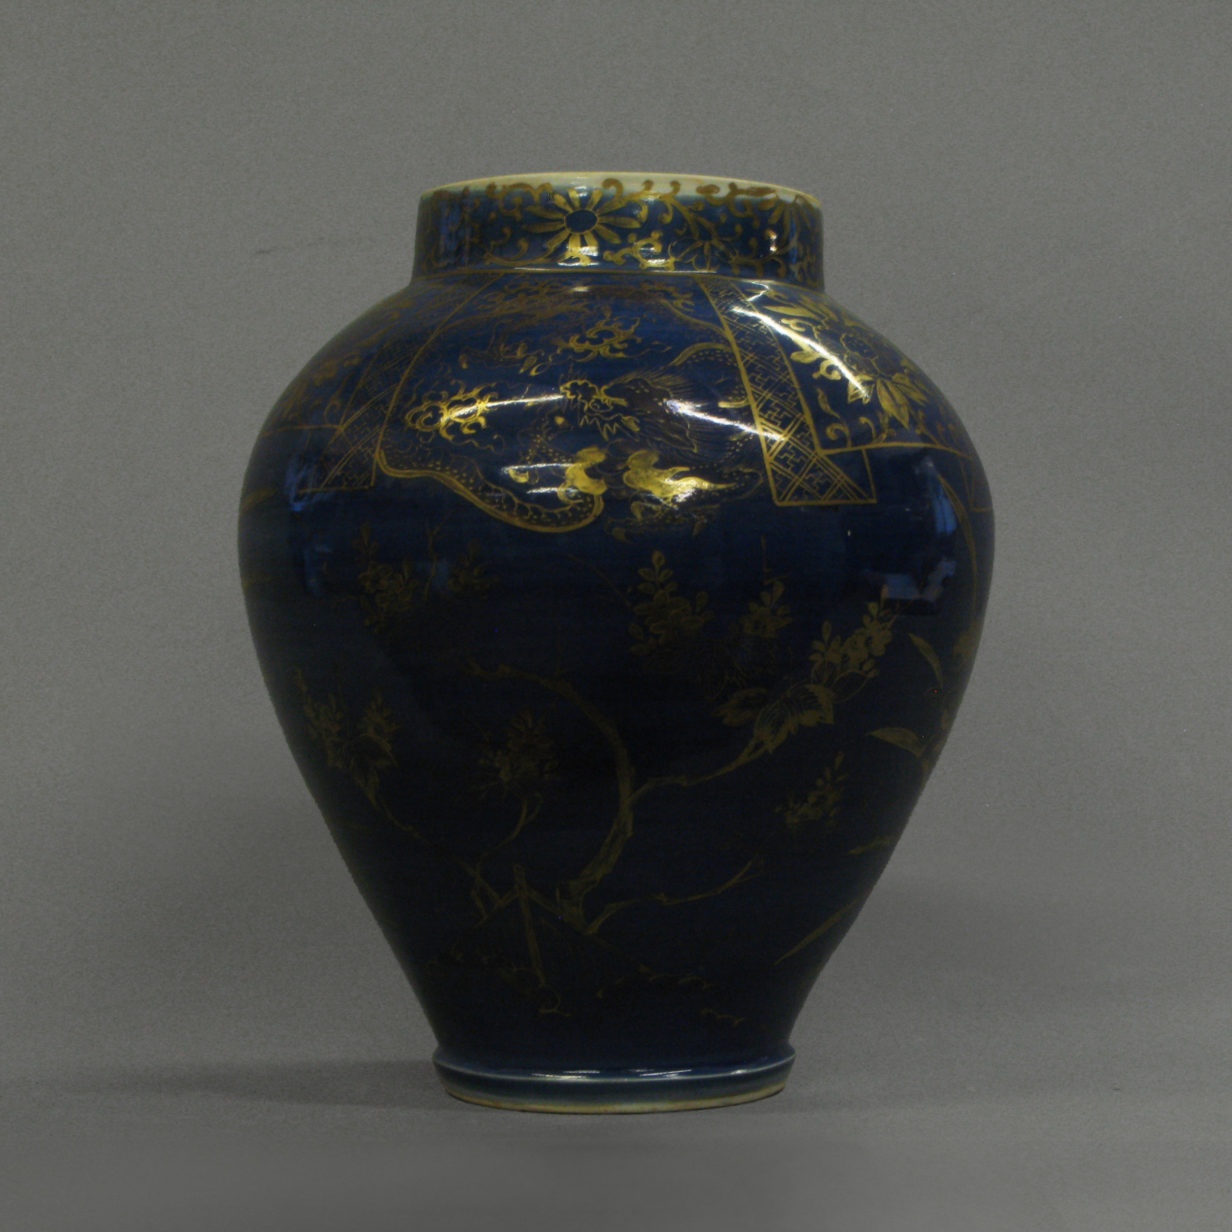 A gilded dark blue vase